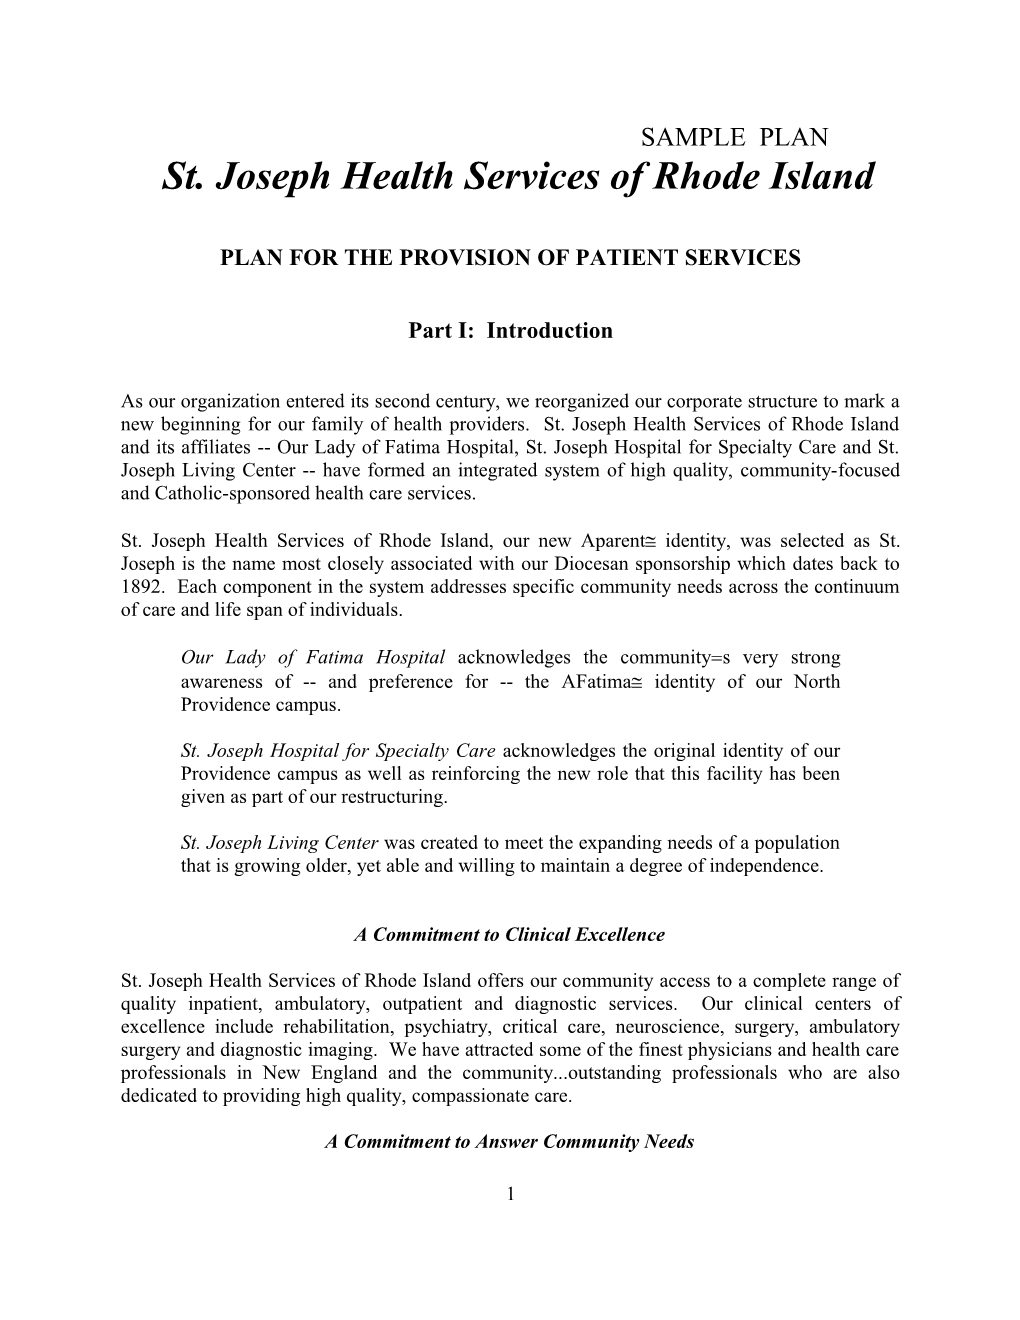 St. Joseph Health Services of Rhode Island